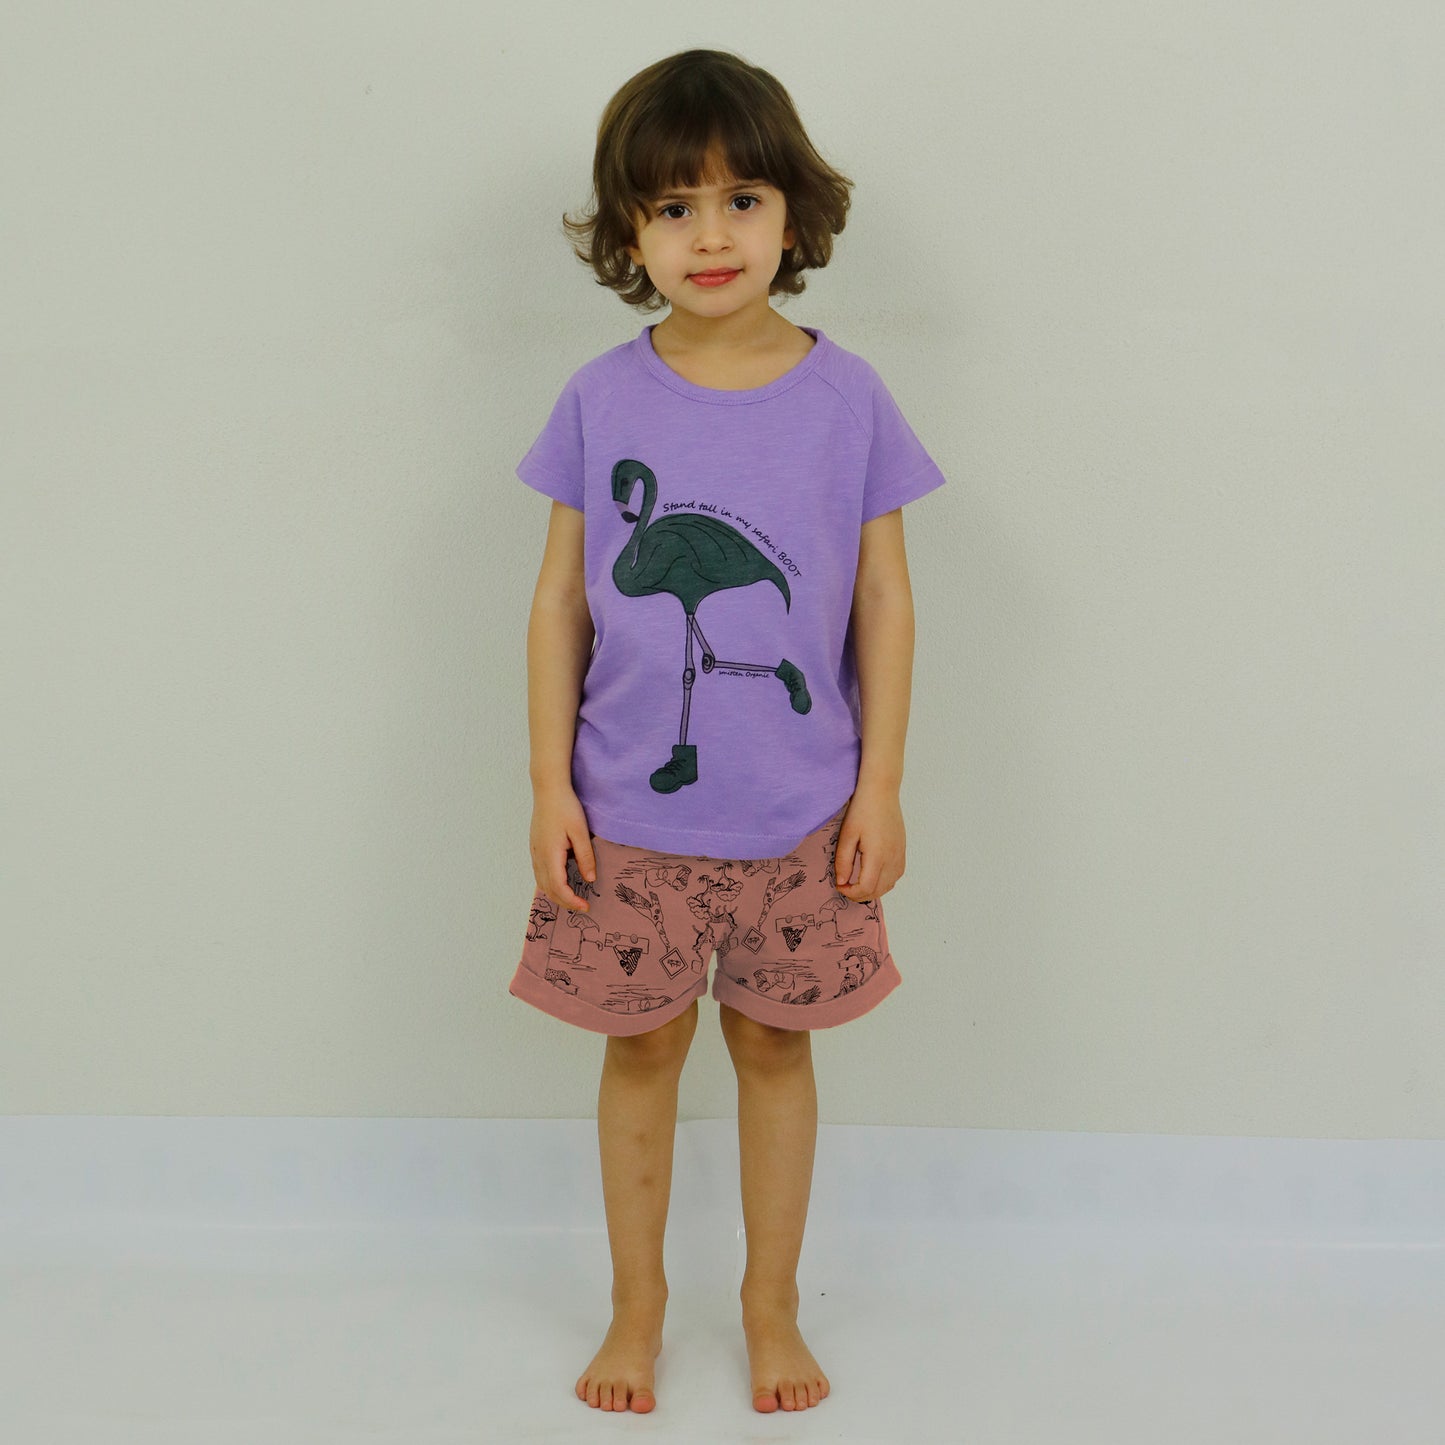 Safari flamingo guide short sleeve purple T-shirt